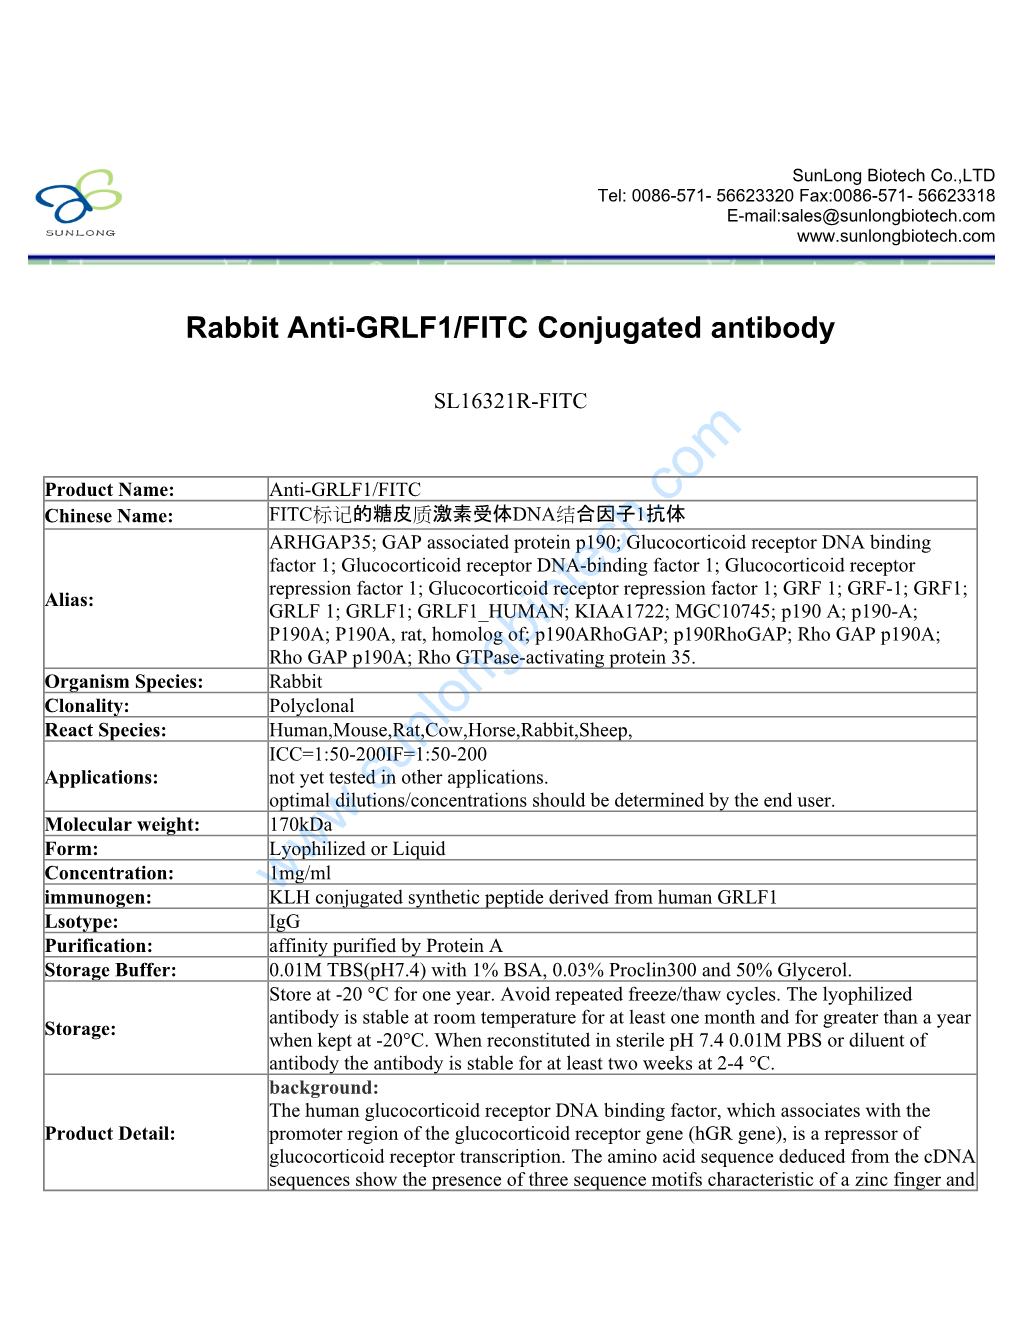 Rabbit Anti-GRLF1/FITC Conjugated Antibody